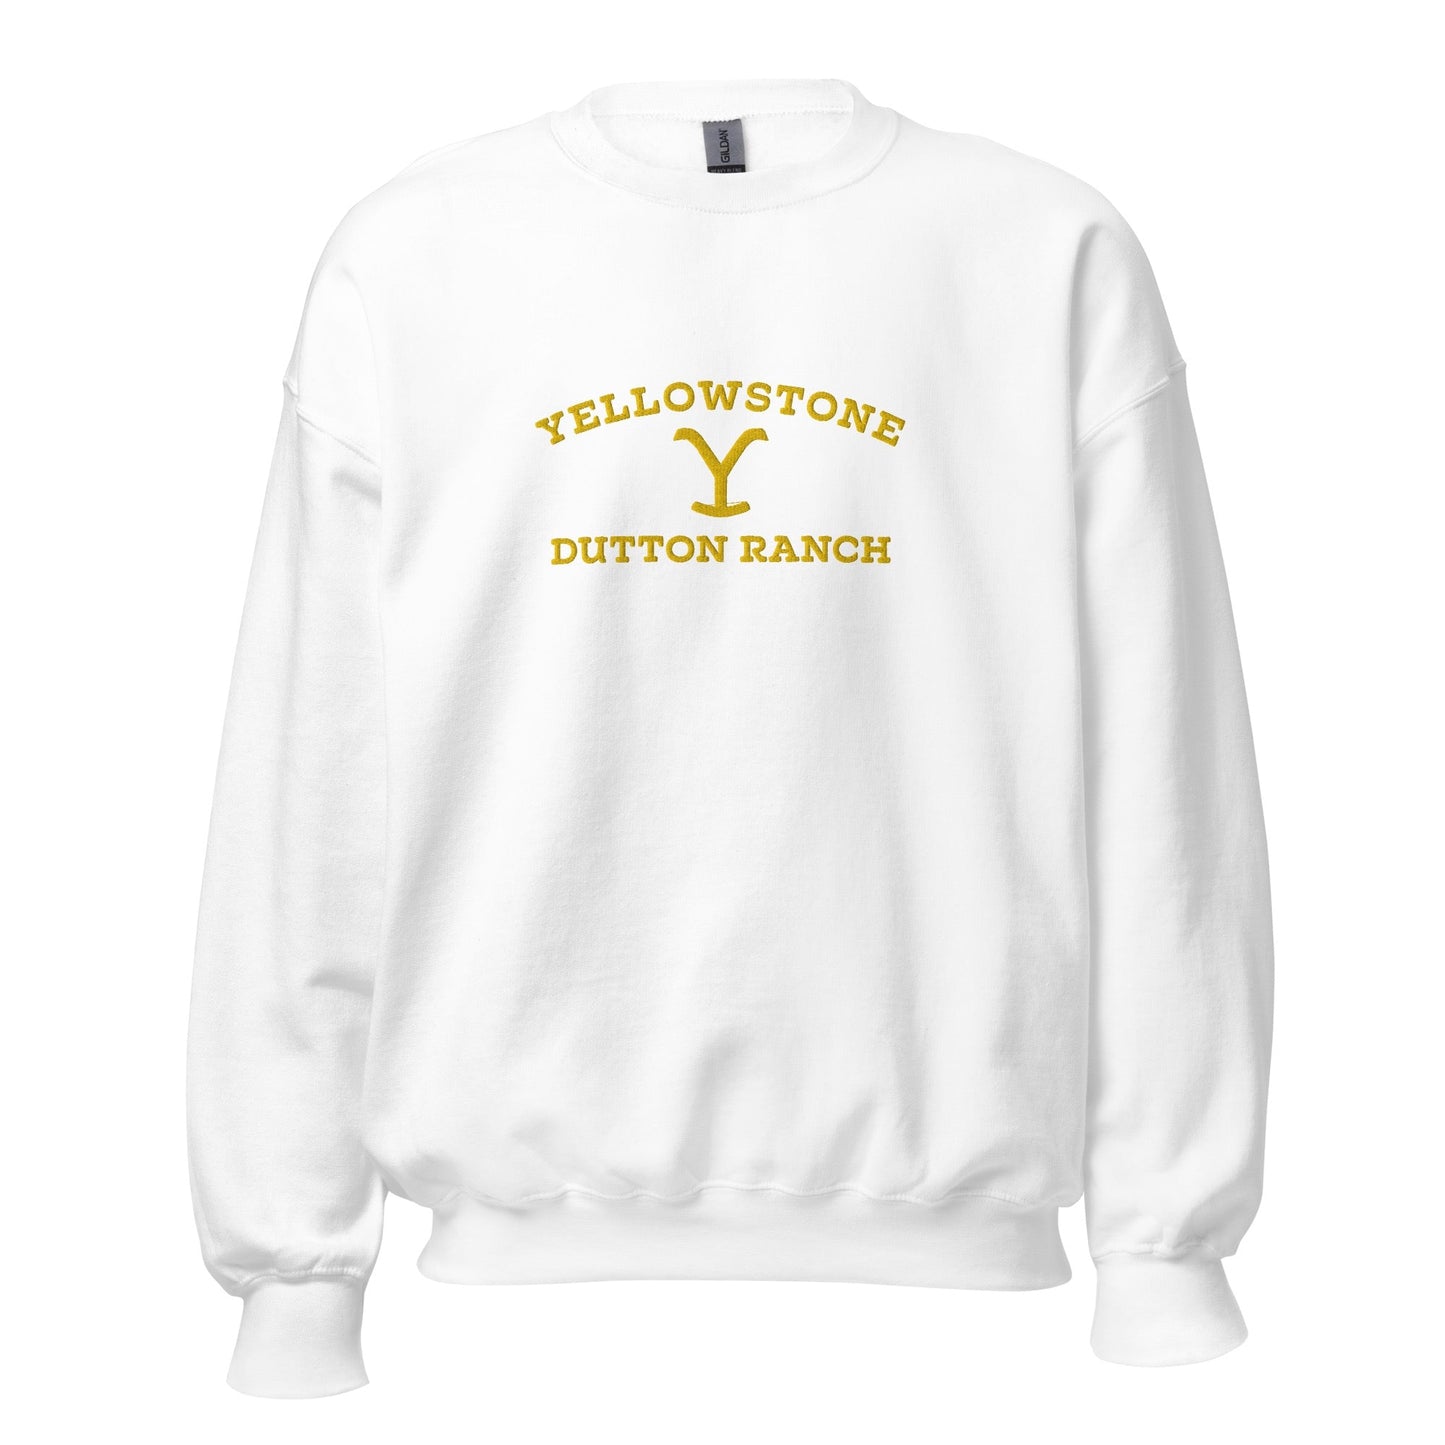 Yellowstone Dutton Ranch Embroidered Sweatshirt - Paramount Shop